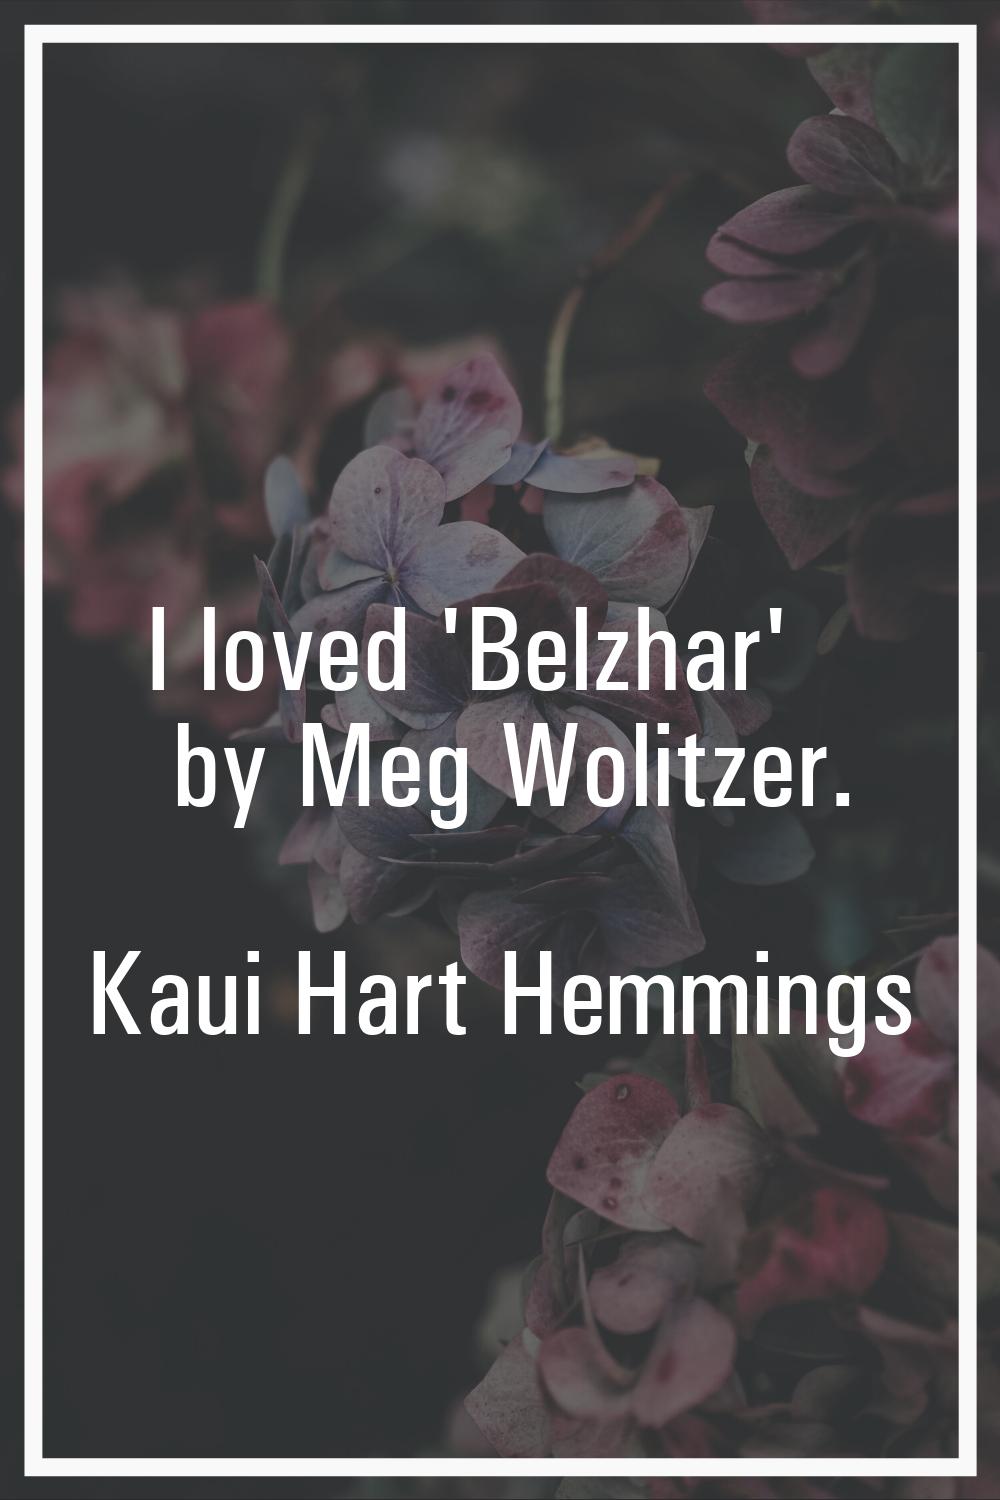 I loved 'Belzhar' by Meg Wolitzer.